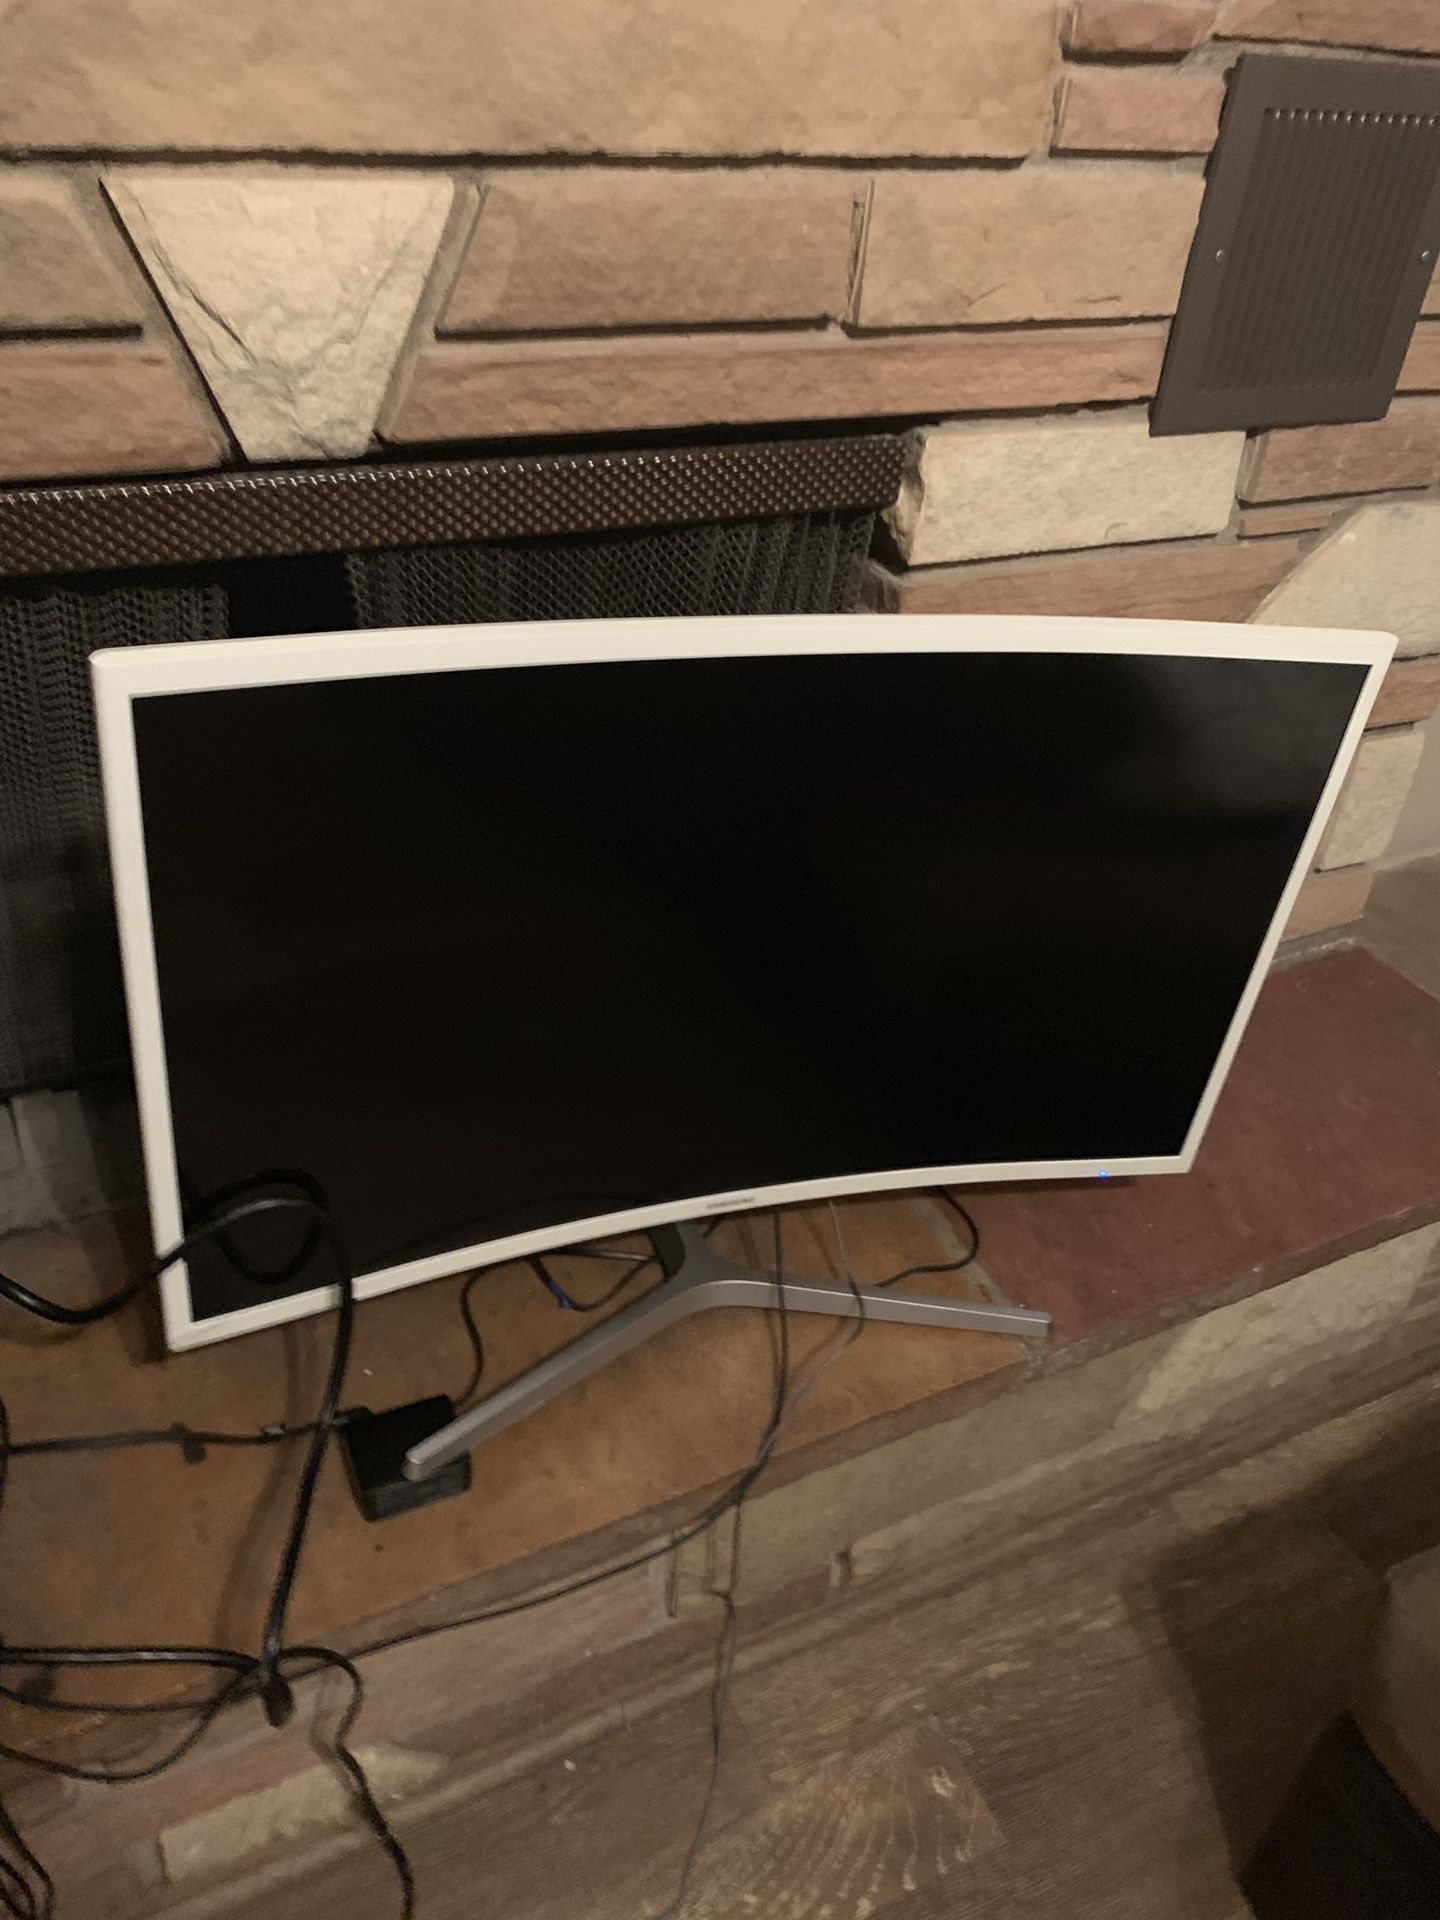 Samgsung 32” curved monitor